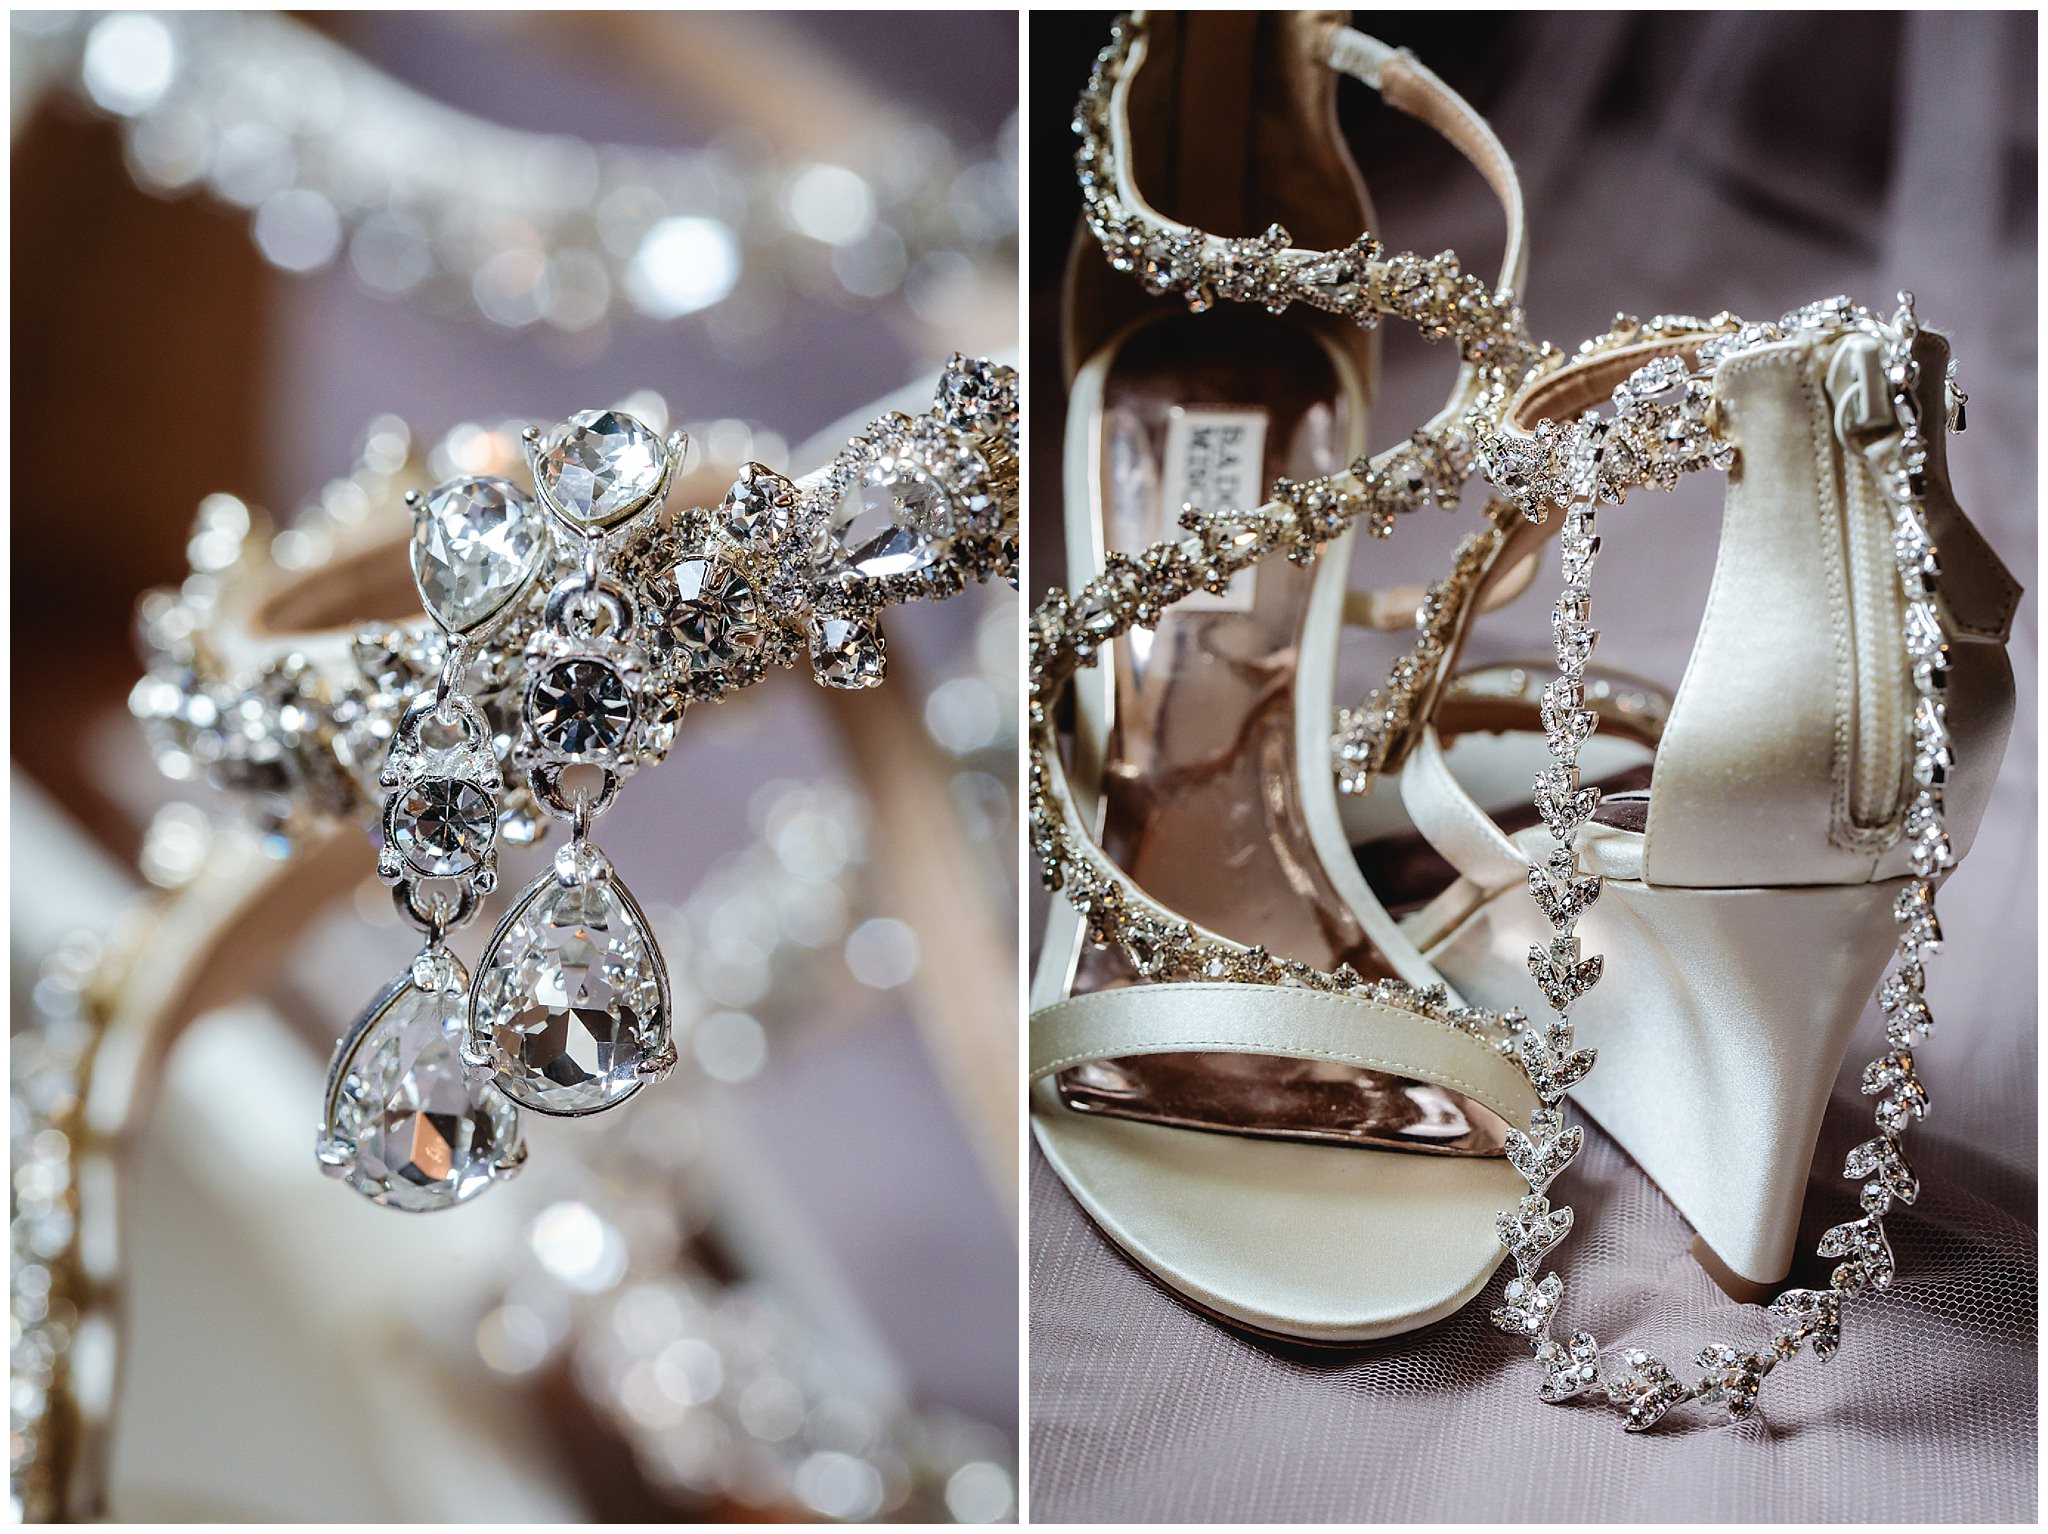 Bride's diamond jewelry hangs from her Badgely Mischka shoes